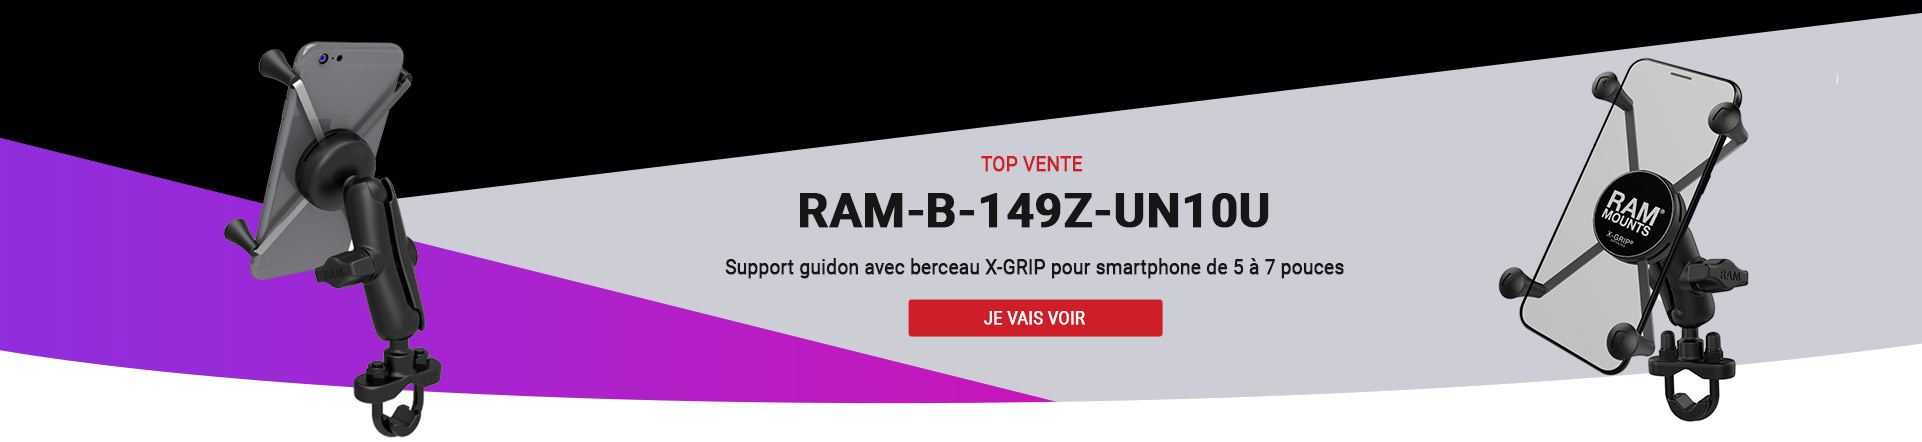 RAM-B-149Z-UN10U